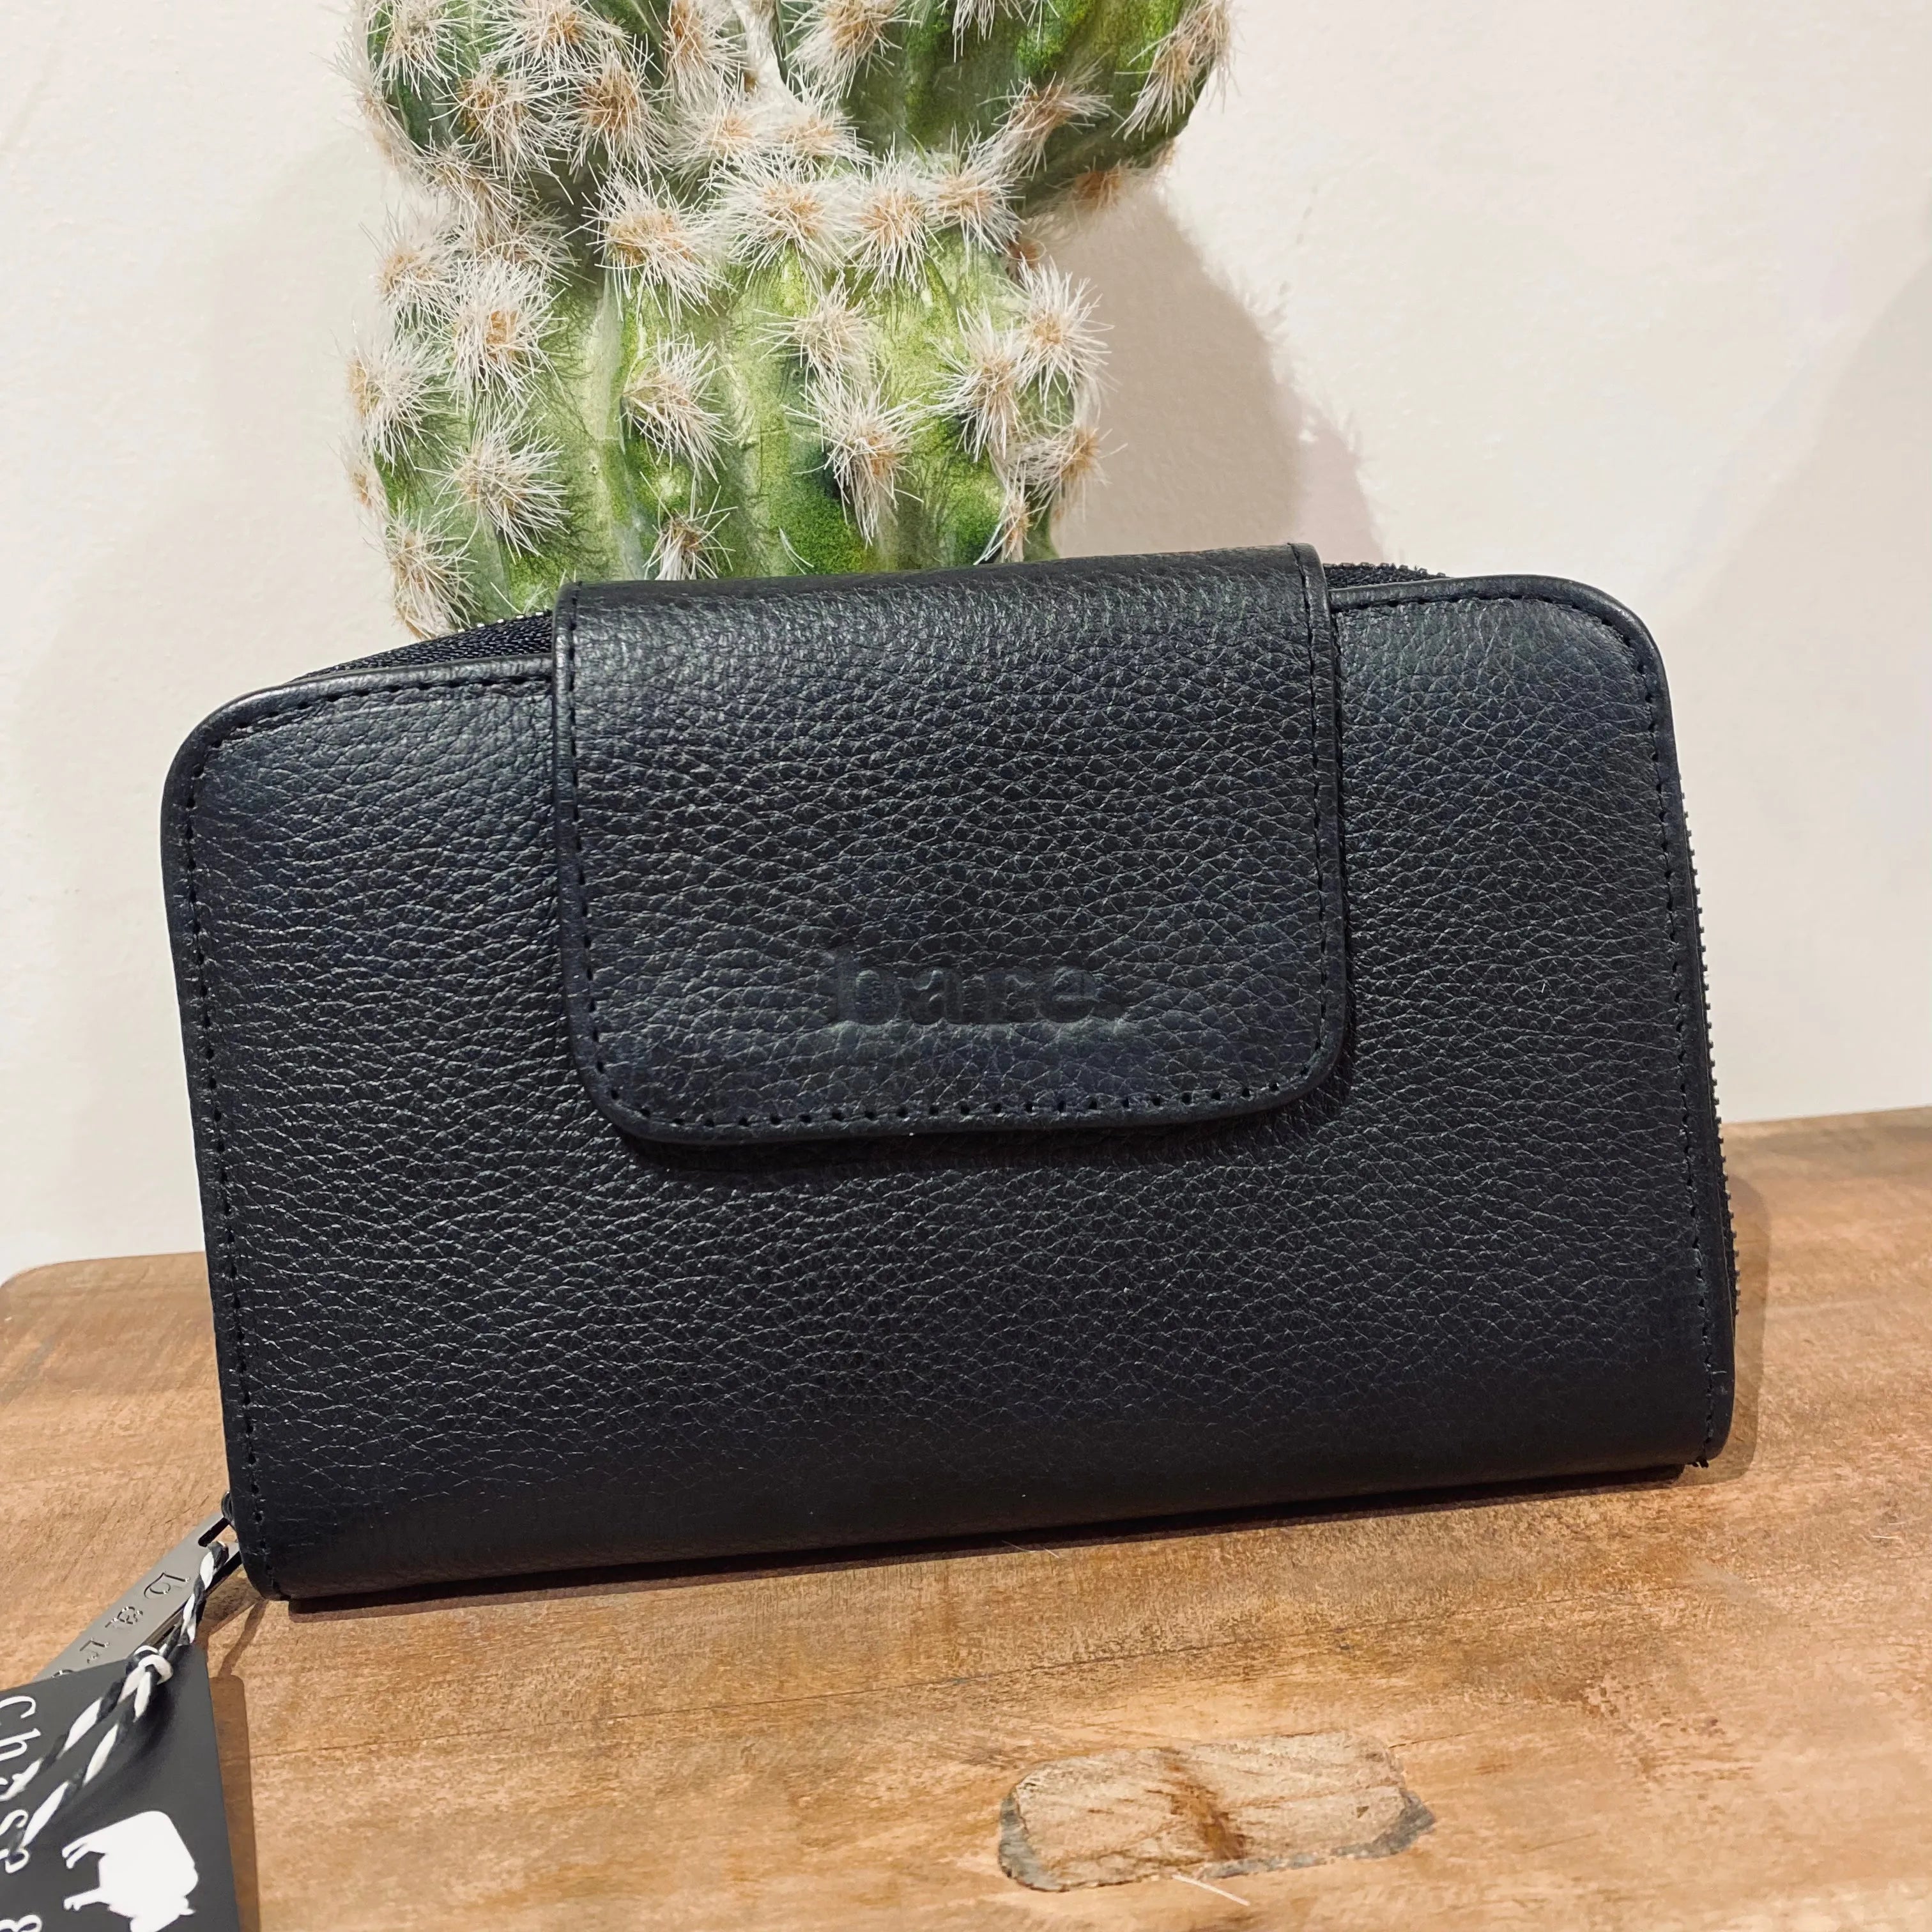 Jorja Black Leather wallet 